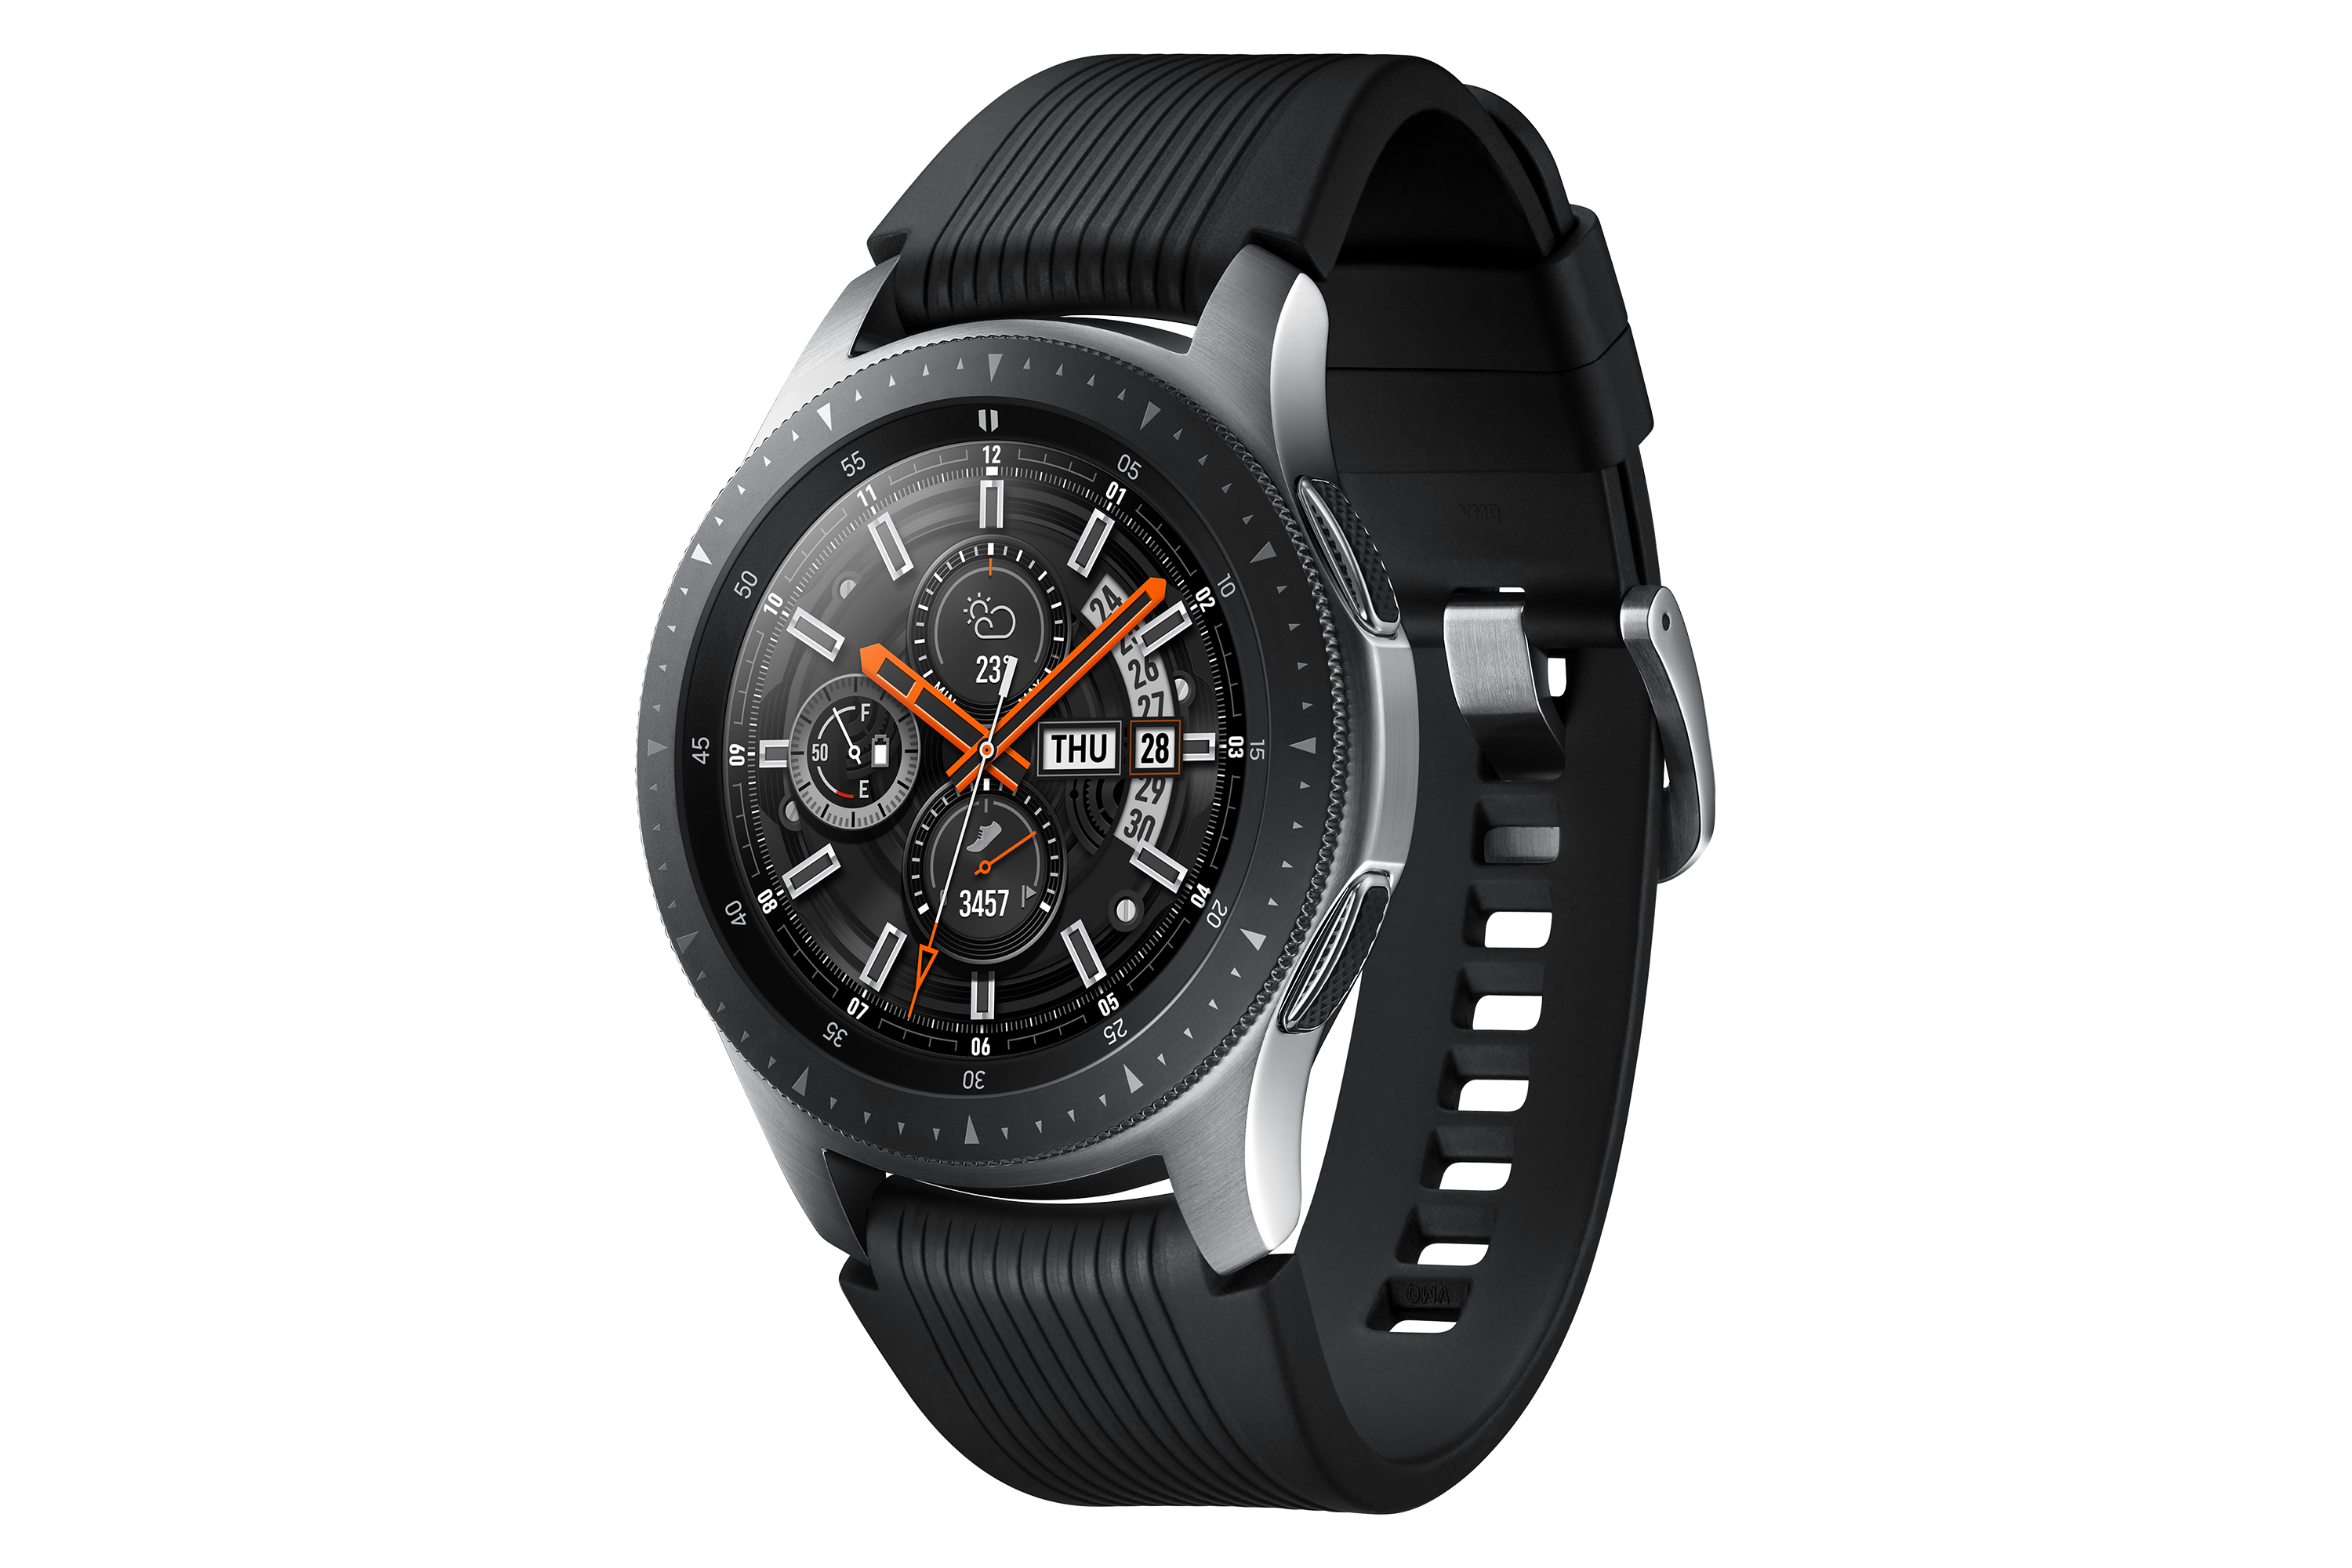 Samsung Galaxy Watch - 46 mm - stříbrná - technologie Smart Watch s řemínek - silikon - displej 1.3 SM-R800NZSAXEZ